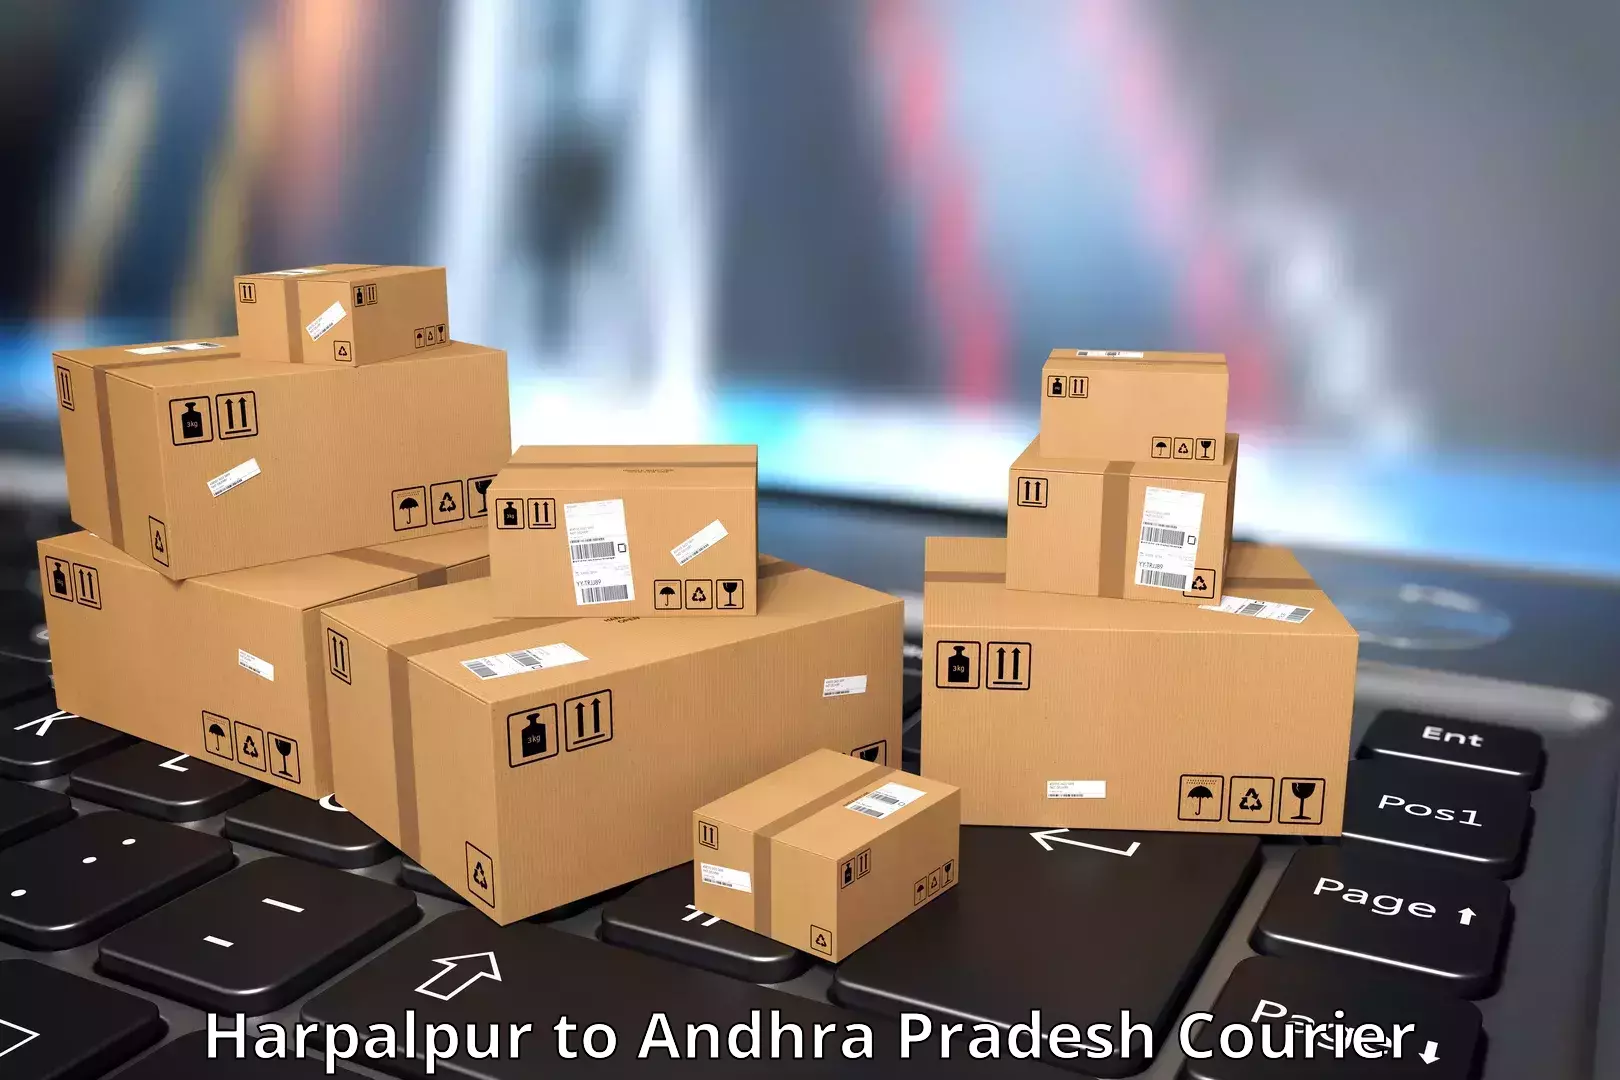 Courier service innovation Harpalpur to Tada Tirupati